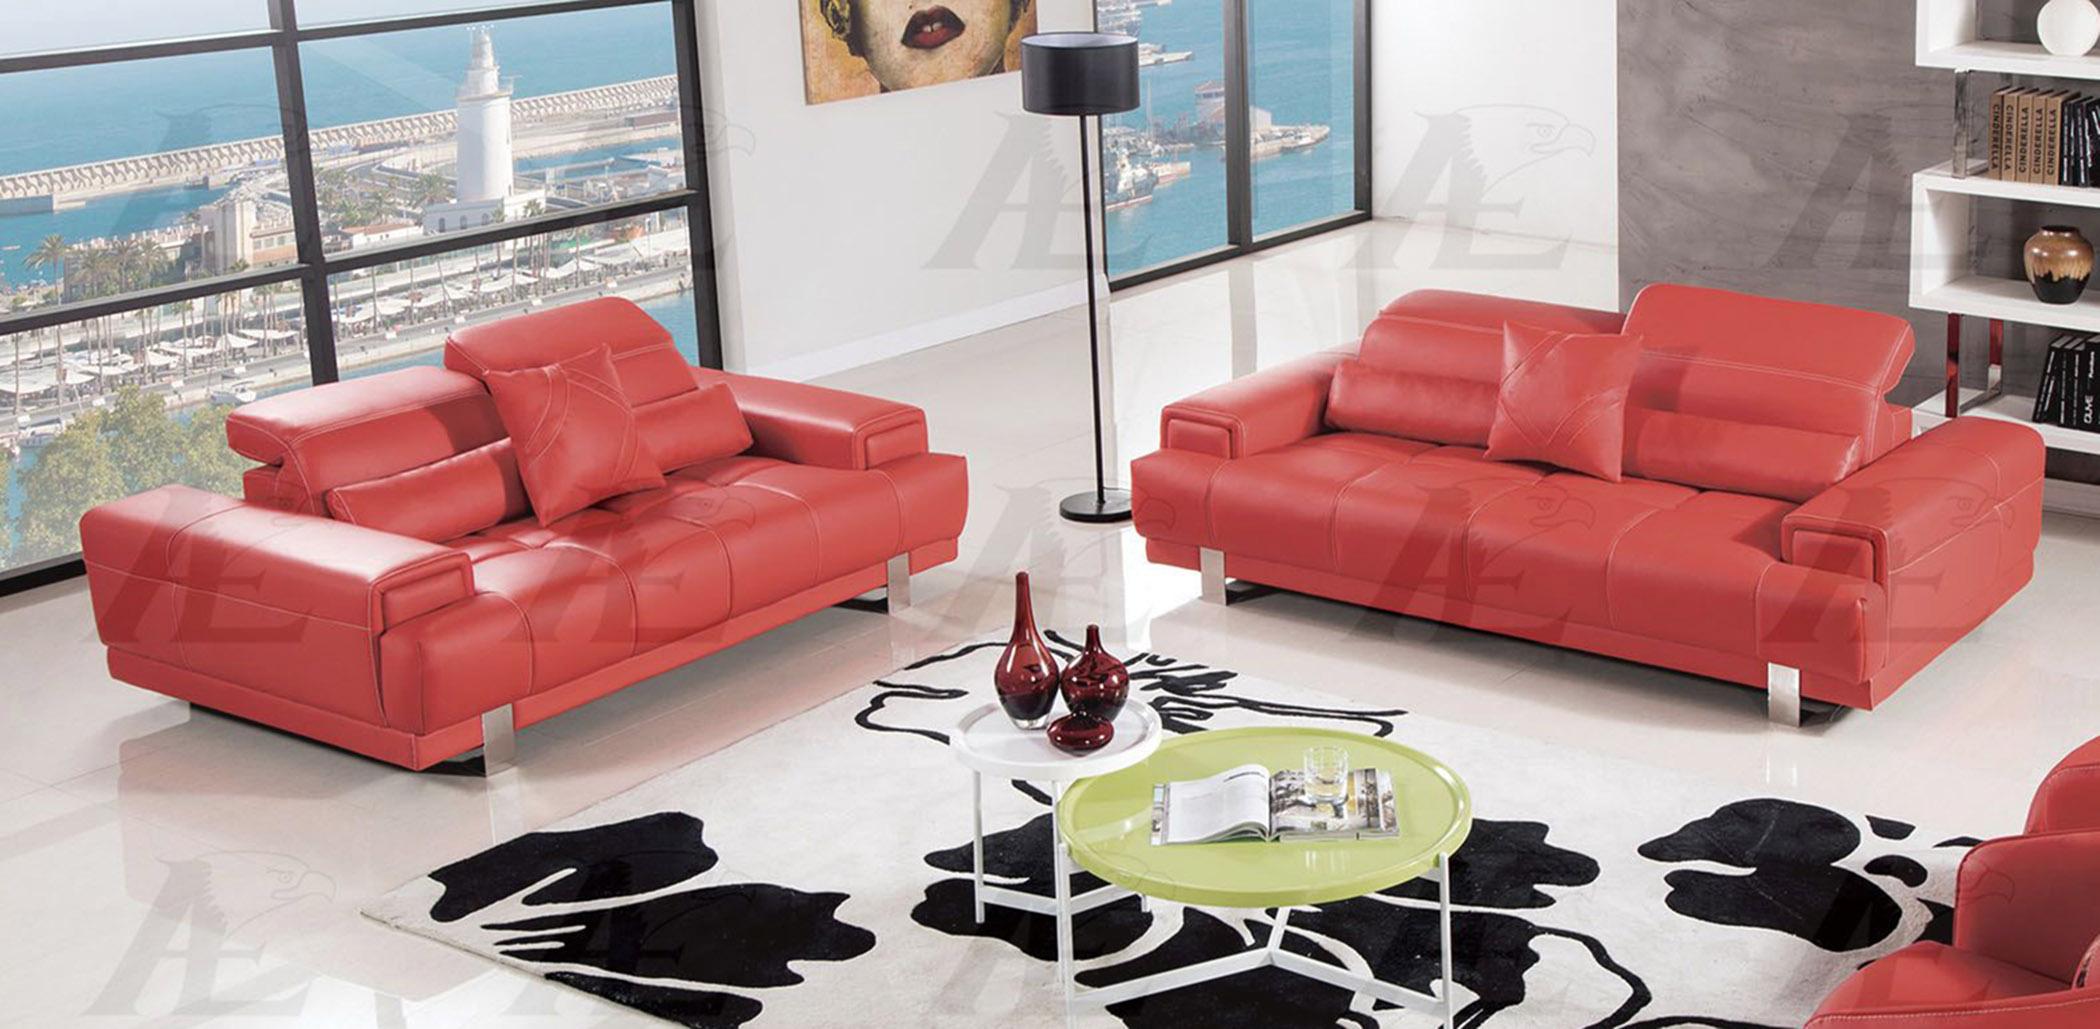 

    
American Eagle Furniture AE606-RED  Sofa Loveseat  Faux Leather Set 2Pcs Modern
